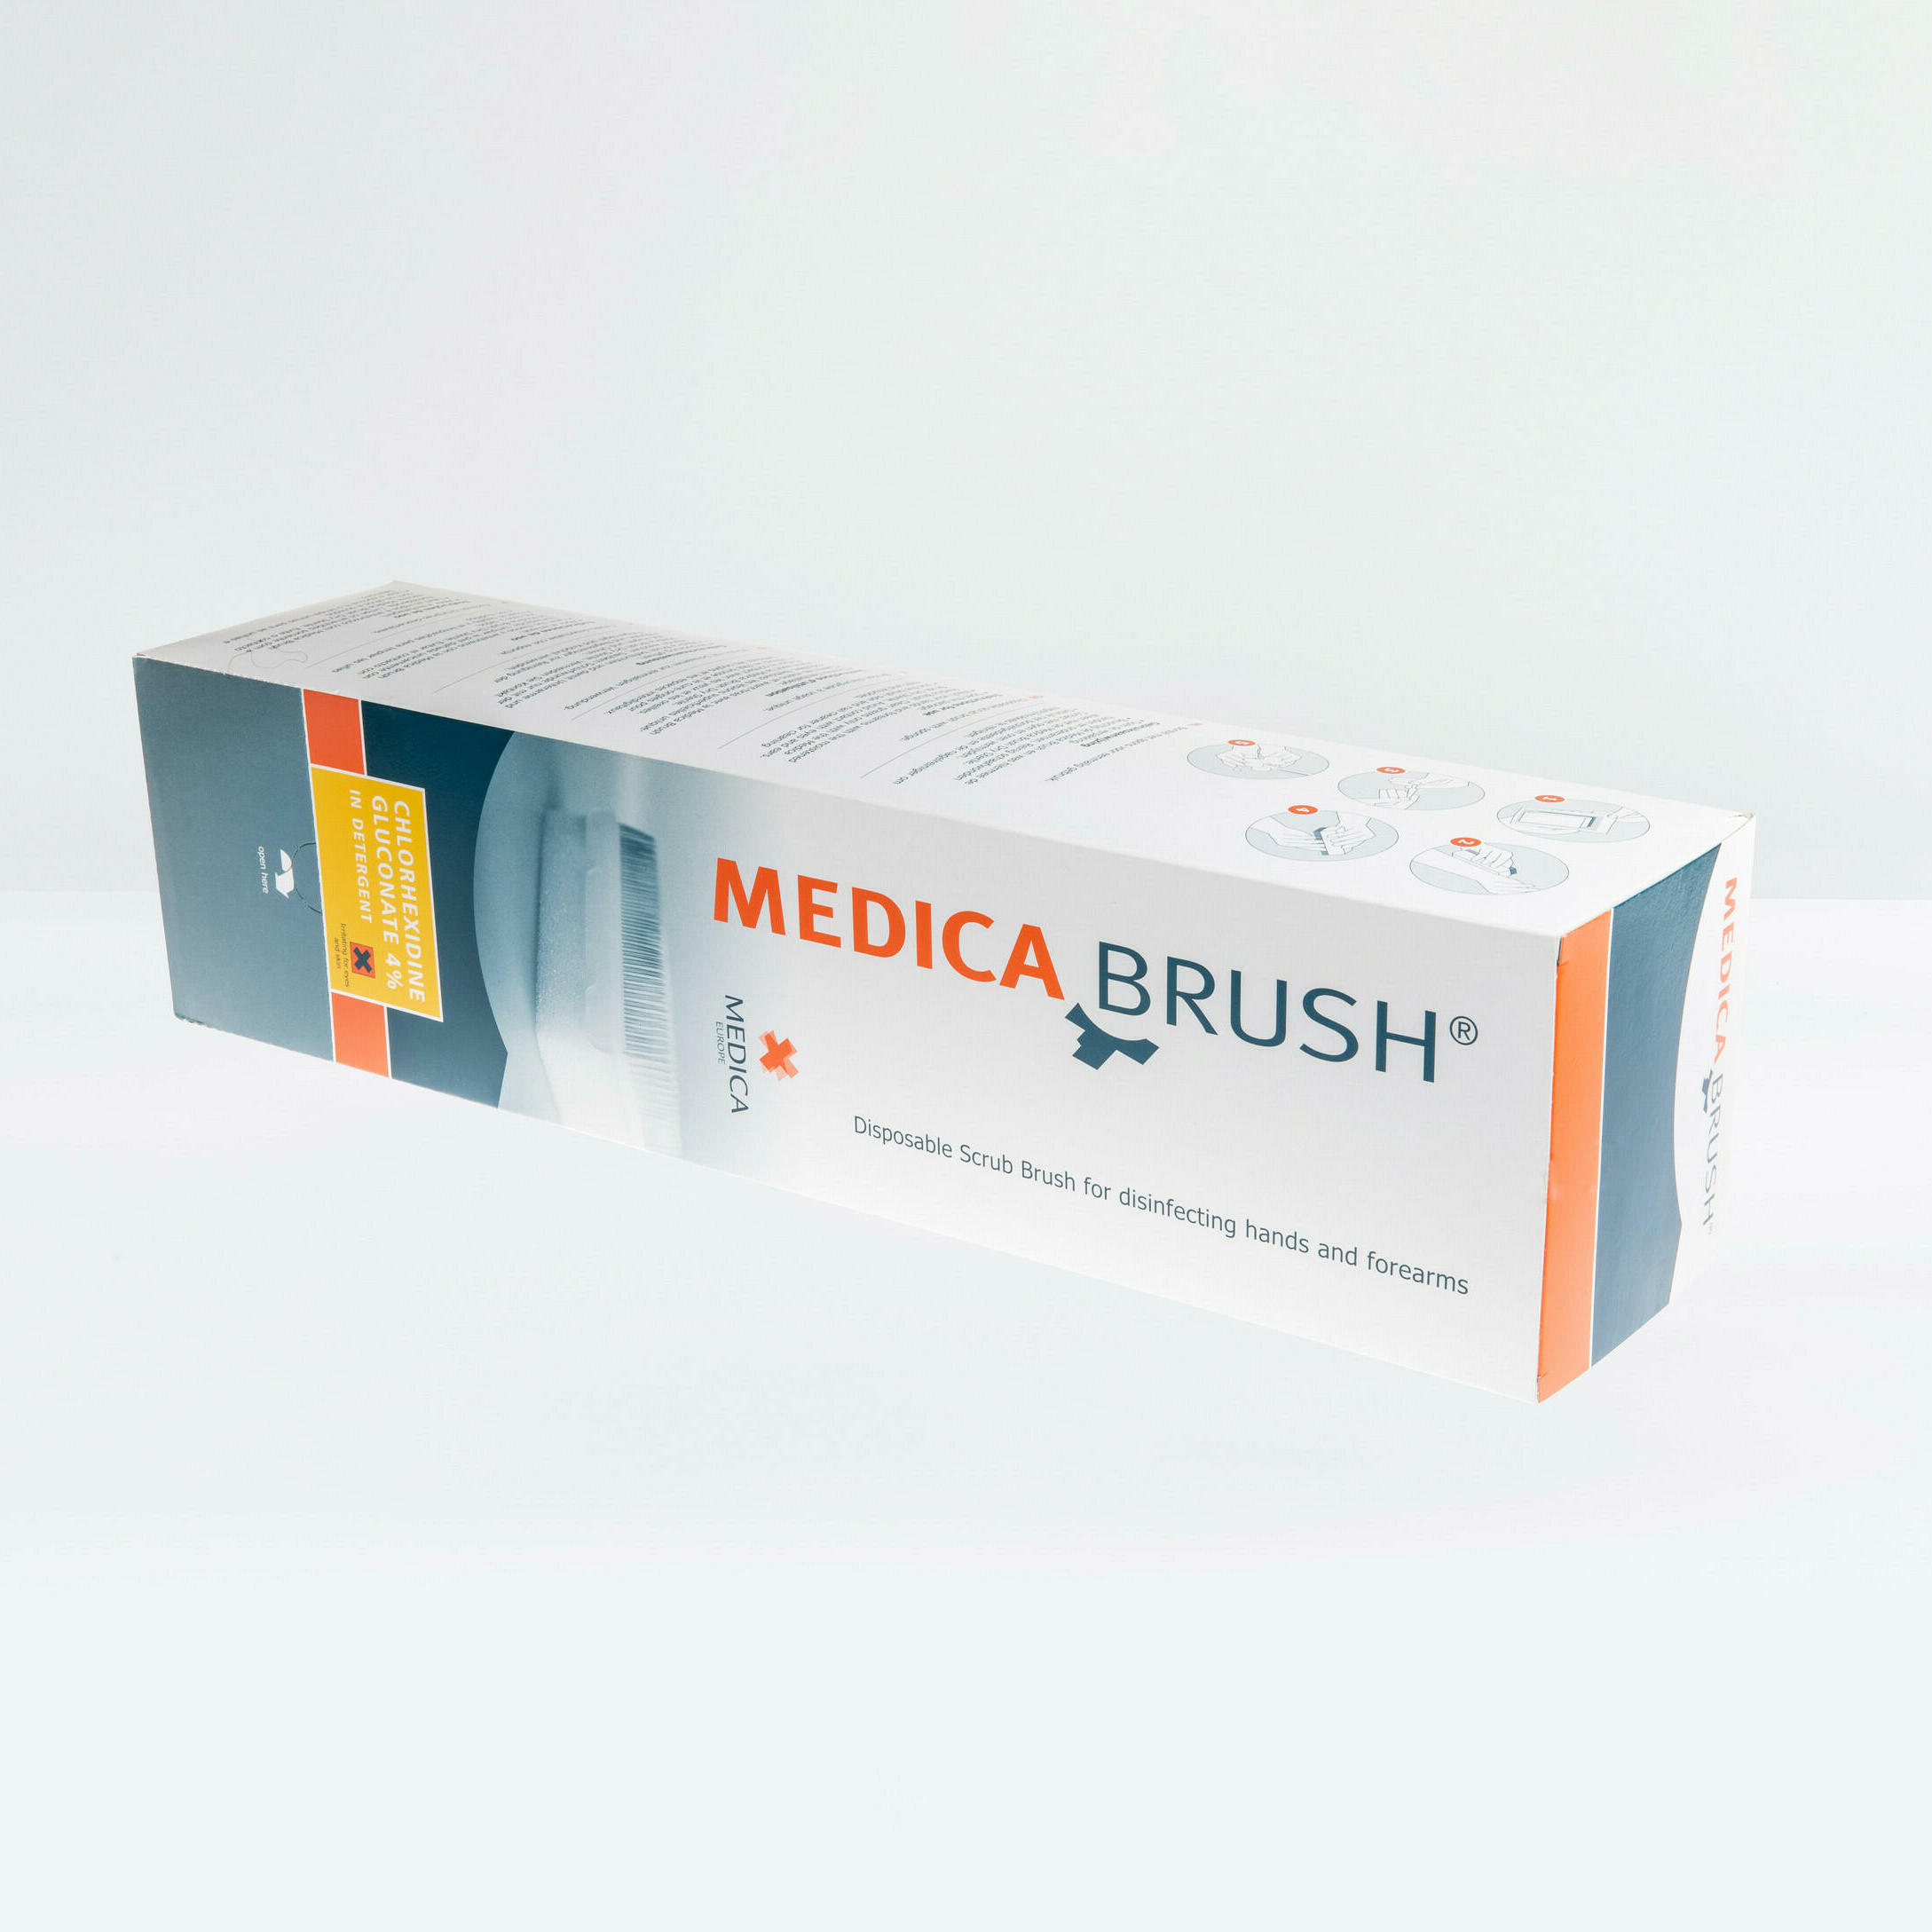 Medica brush